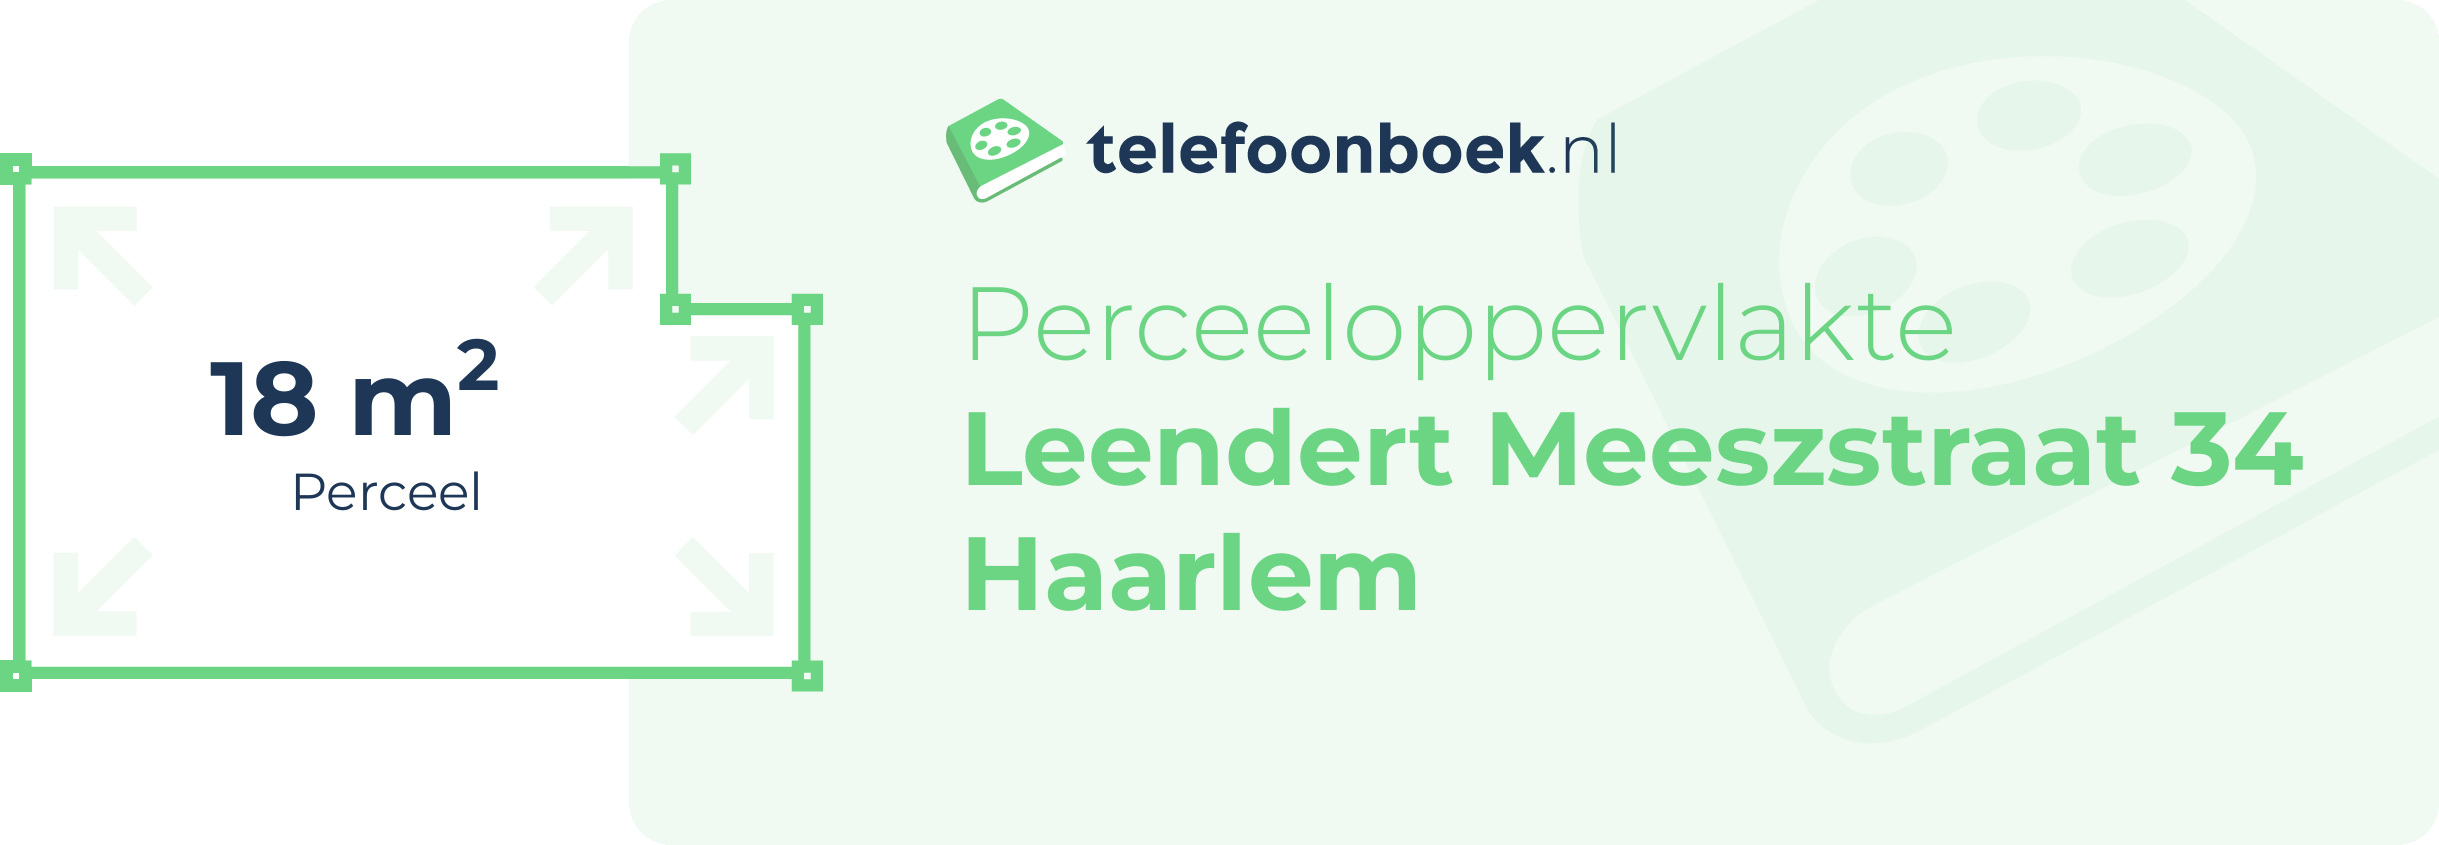 Perceeloppervlakte Leendert Meeszstraat 34 Haarlem